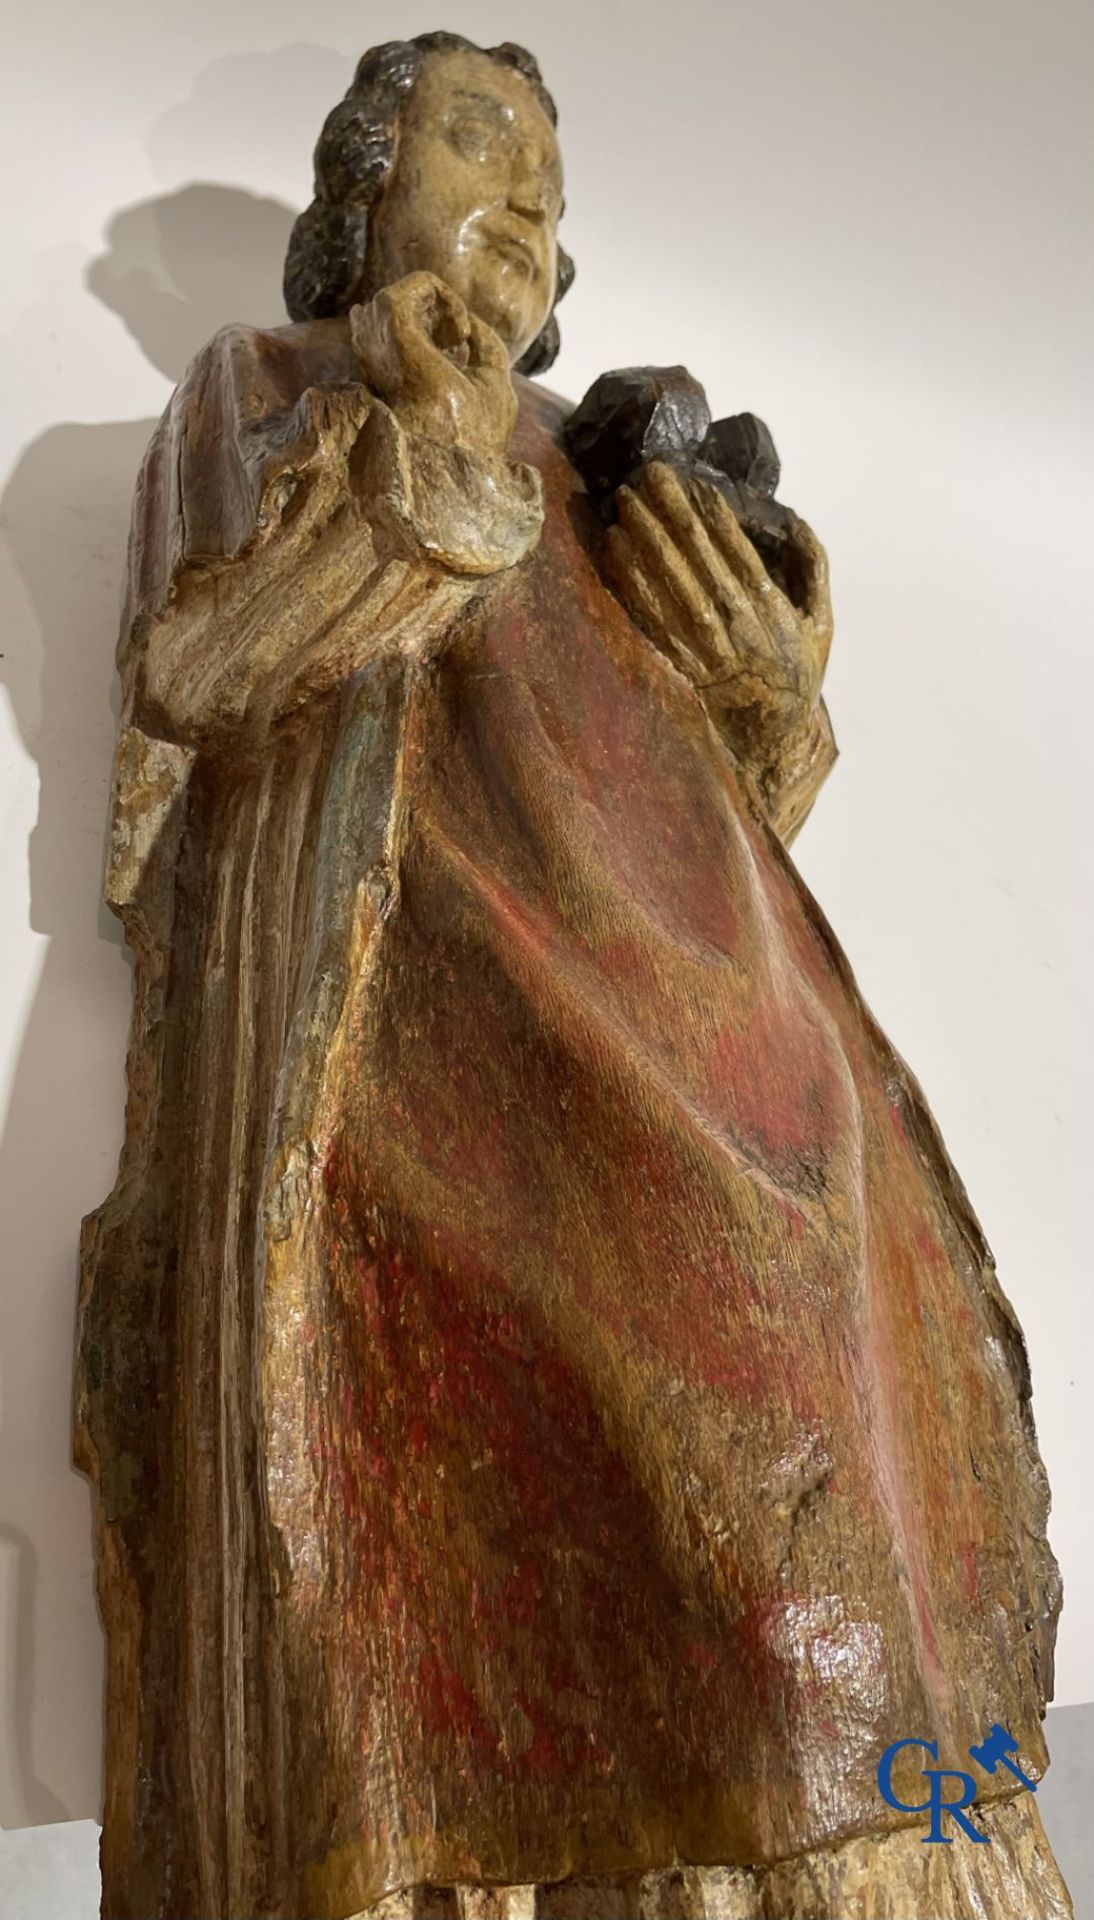 Wooden sculpture: Polychrome wood sculpture of a saint. Saint Stephen. Probably 17th century. - Bild 24 aus 26